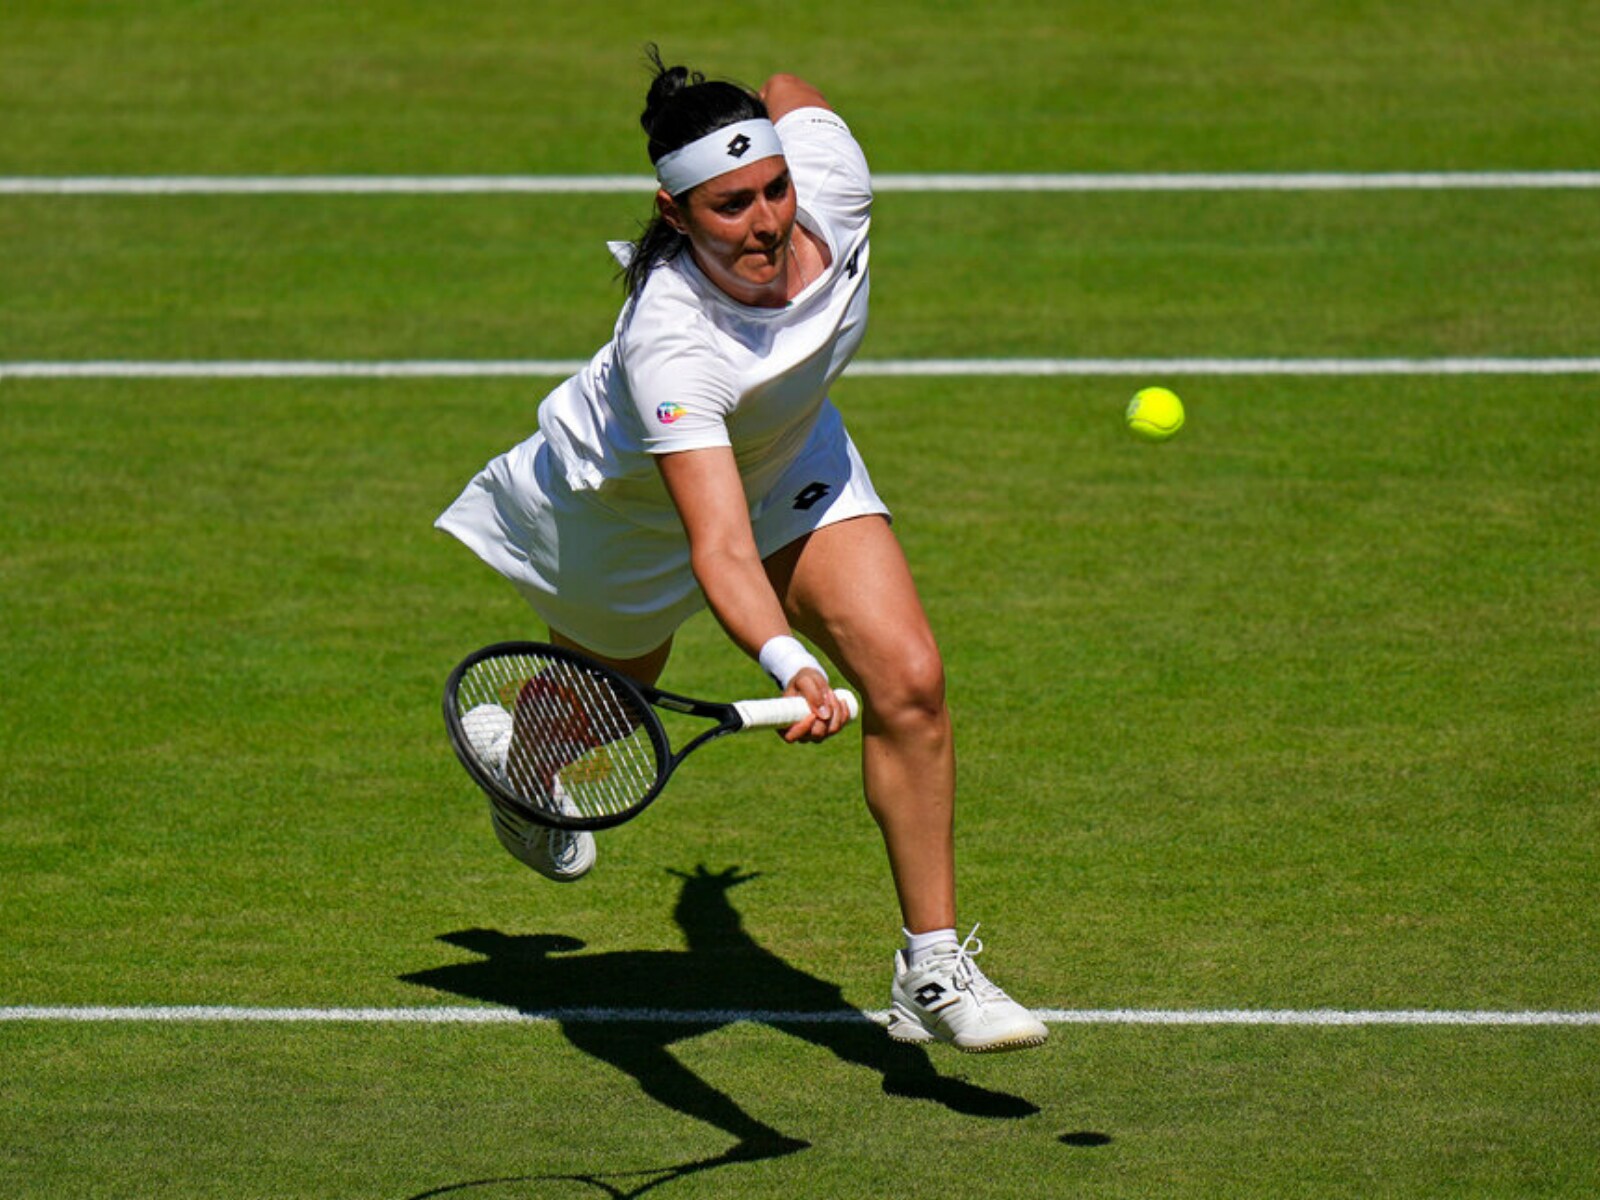 Wimbledon Ons Jabeur Beats Tatjana Maria to Reach First Grand Slam Final